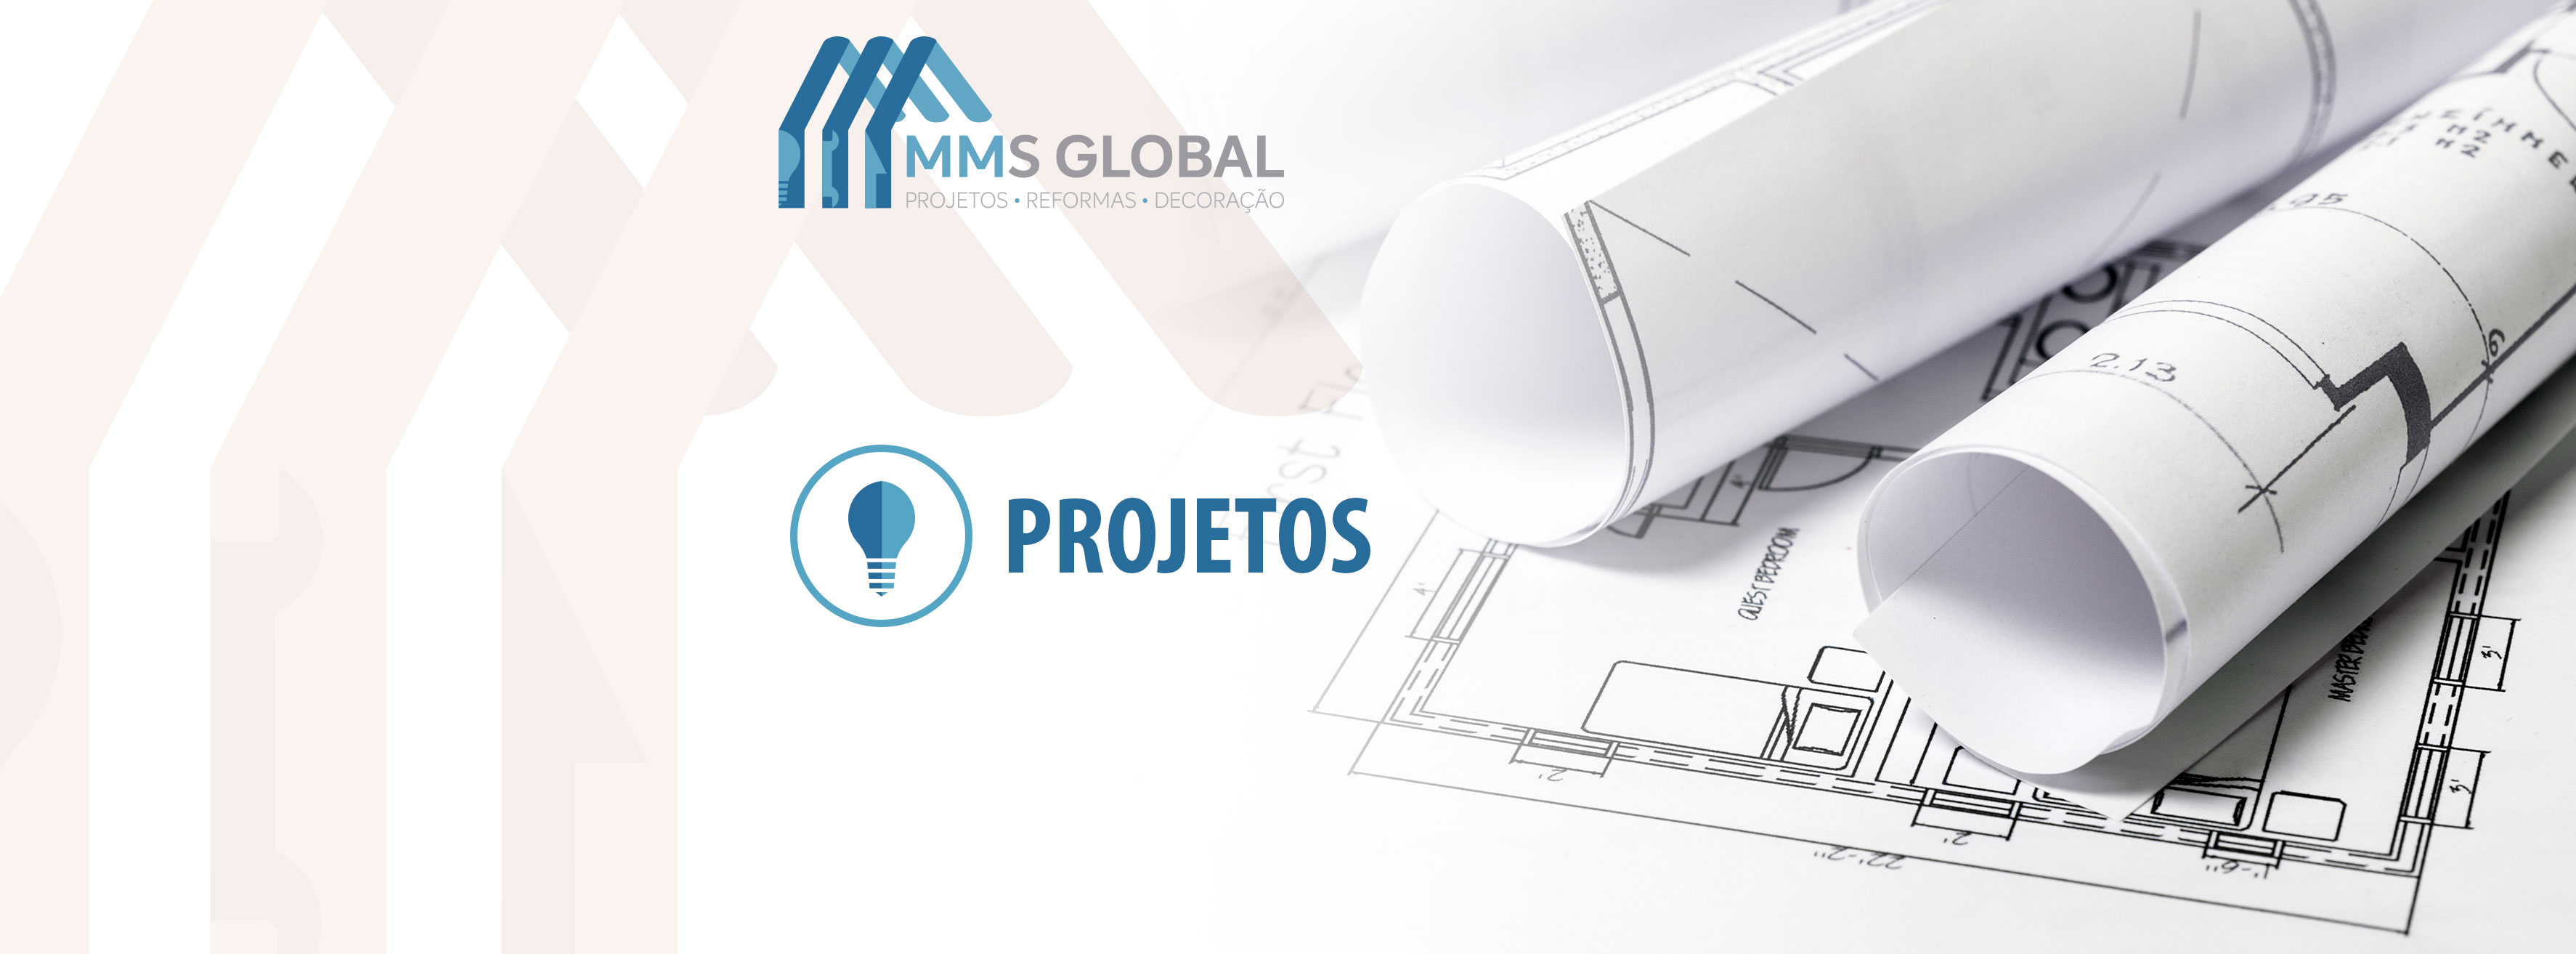 slide-mmsglobal-projetos1